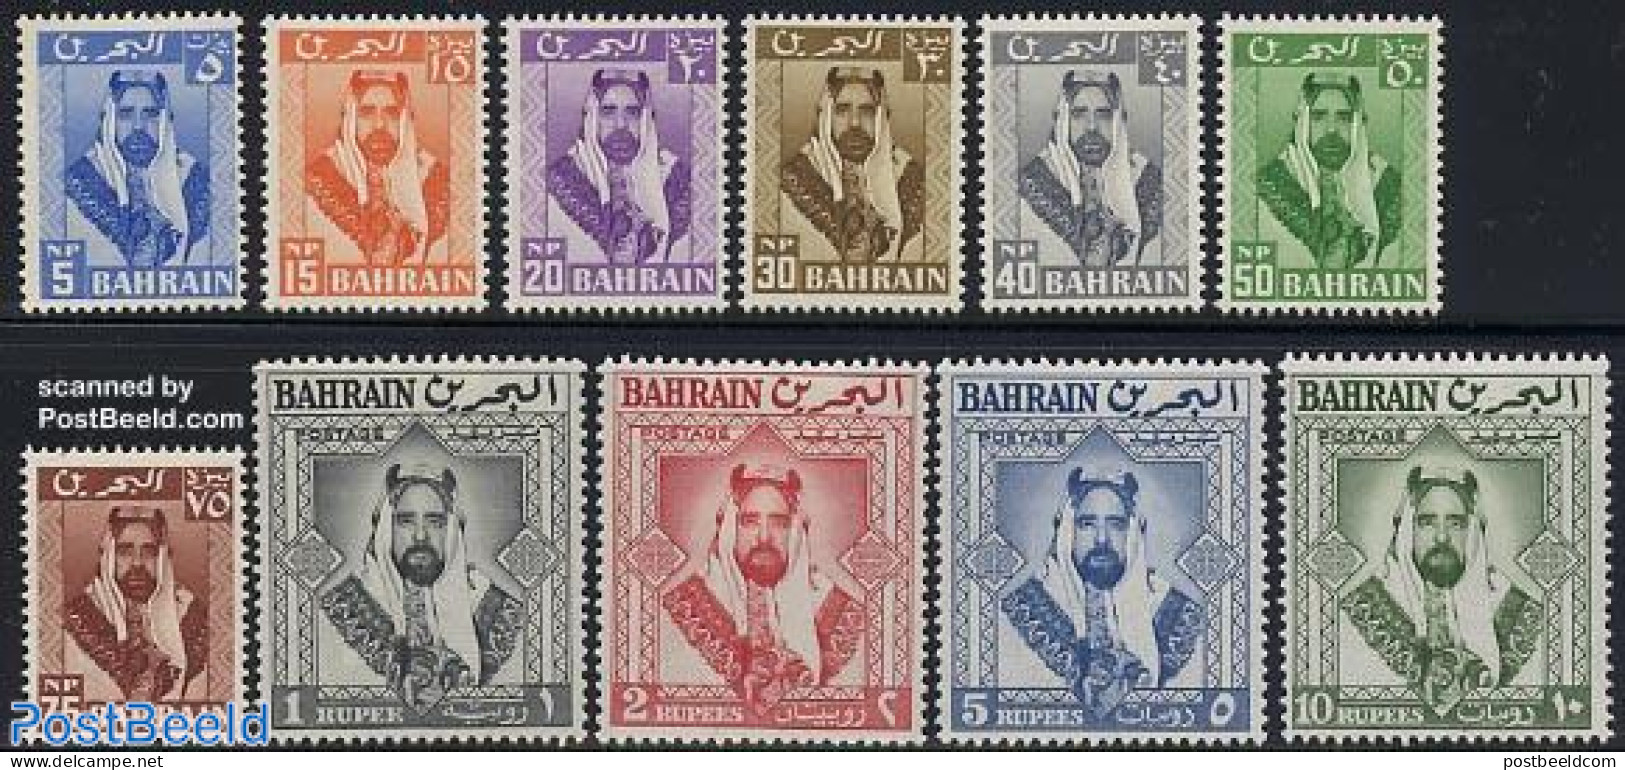 Bahrain 1960 Definitives 11v, Unused (hinged) - Bahreïn (1965-...)